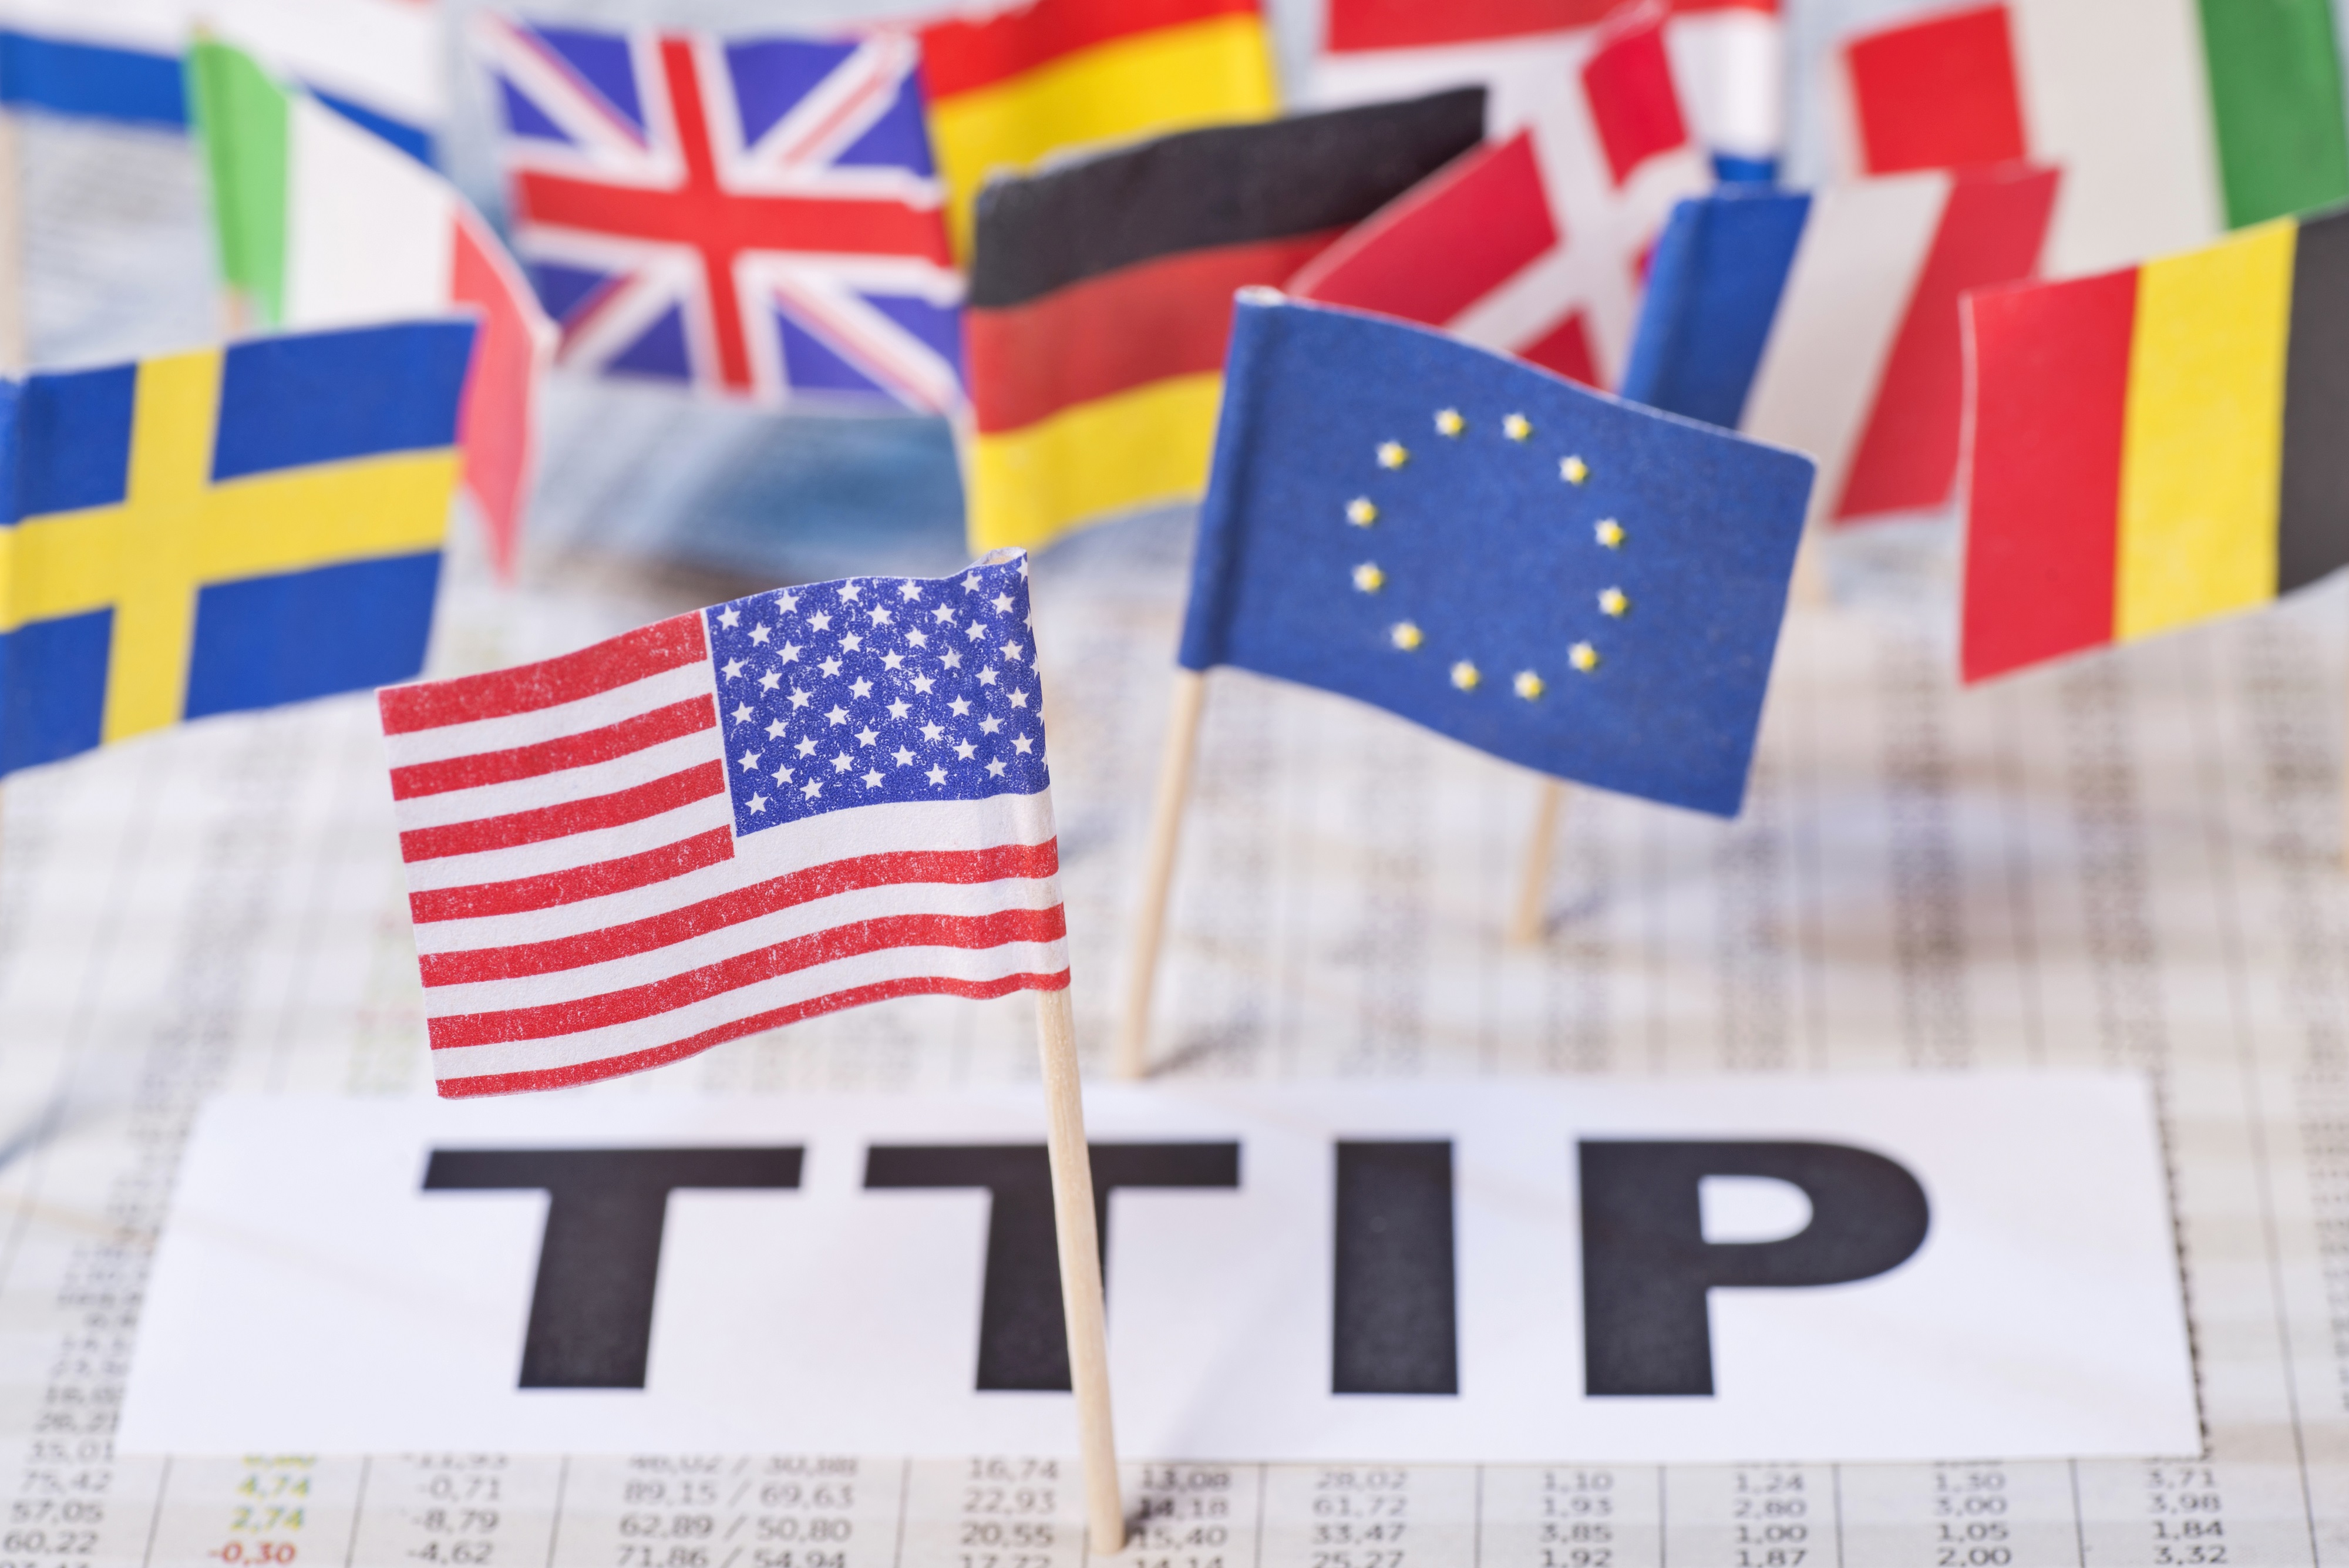 the-path-to-ttip-2-0-center-for-transatlantic-relations